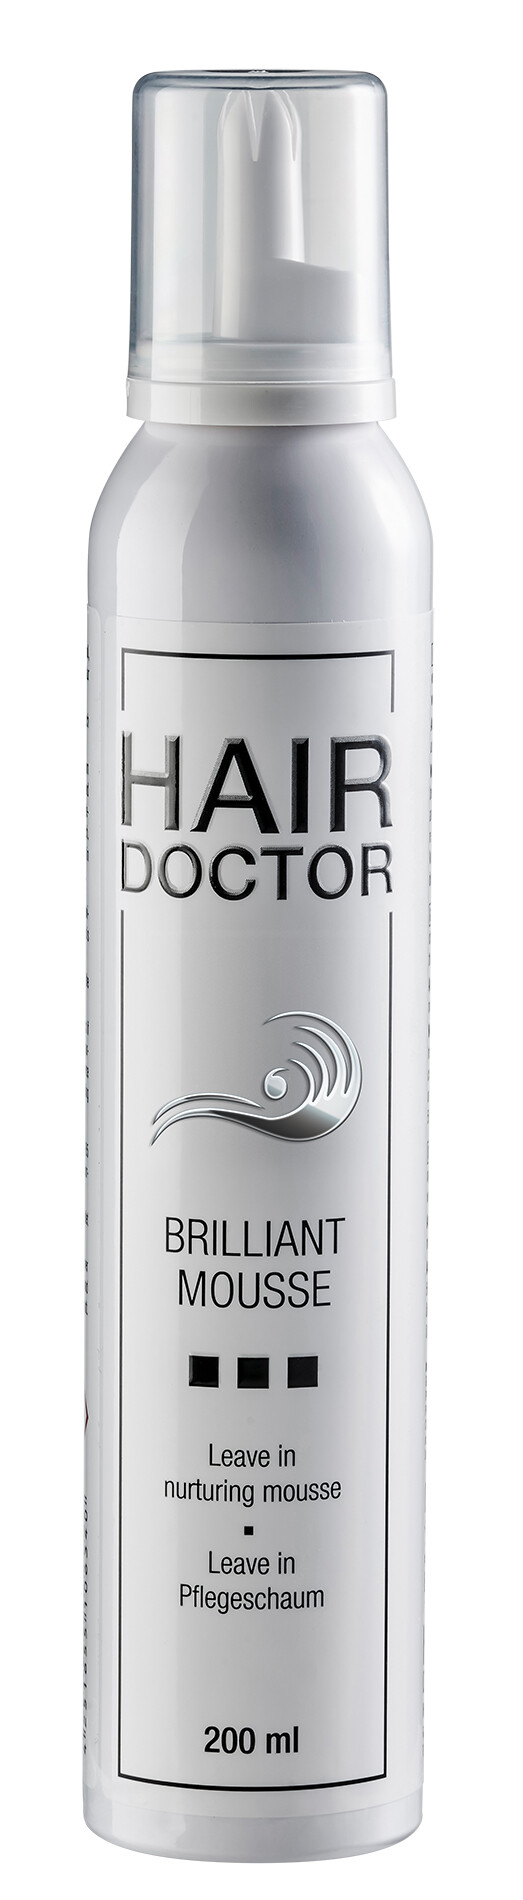 Pflege HAIR DOCTOR Brilliant Mousse 200ml kaufen